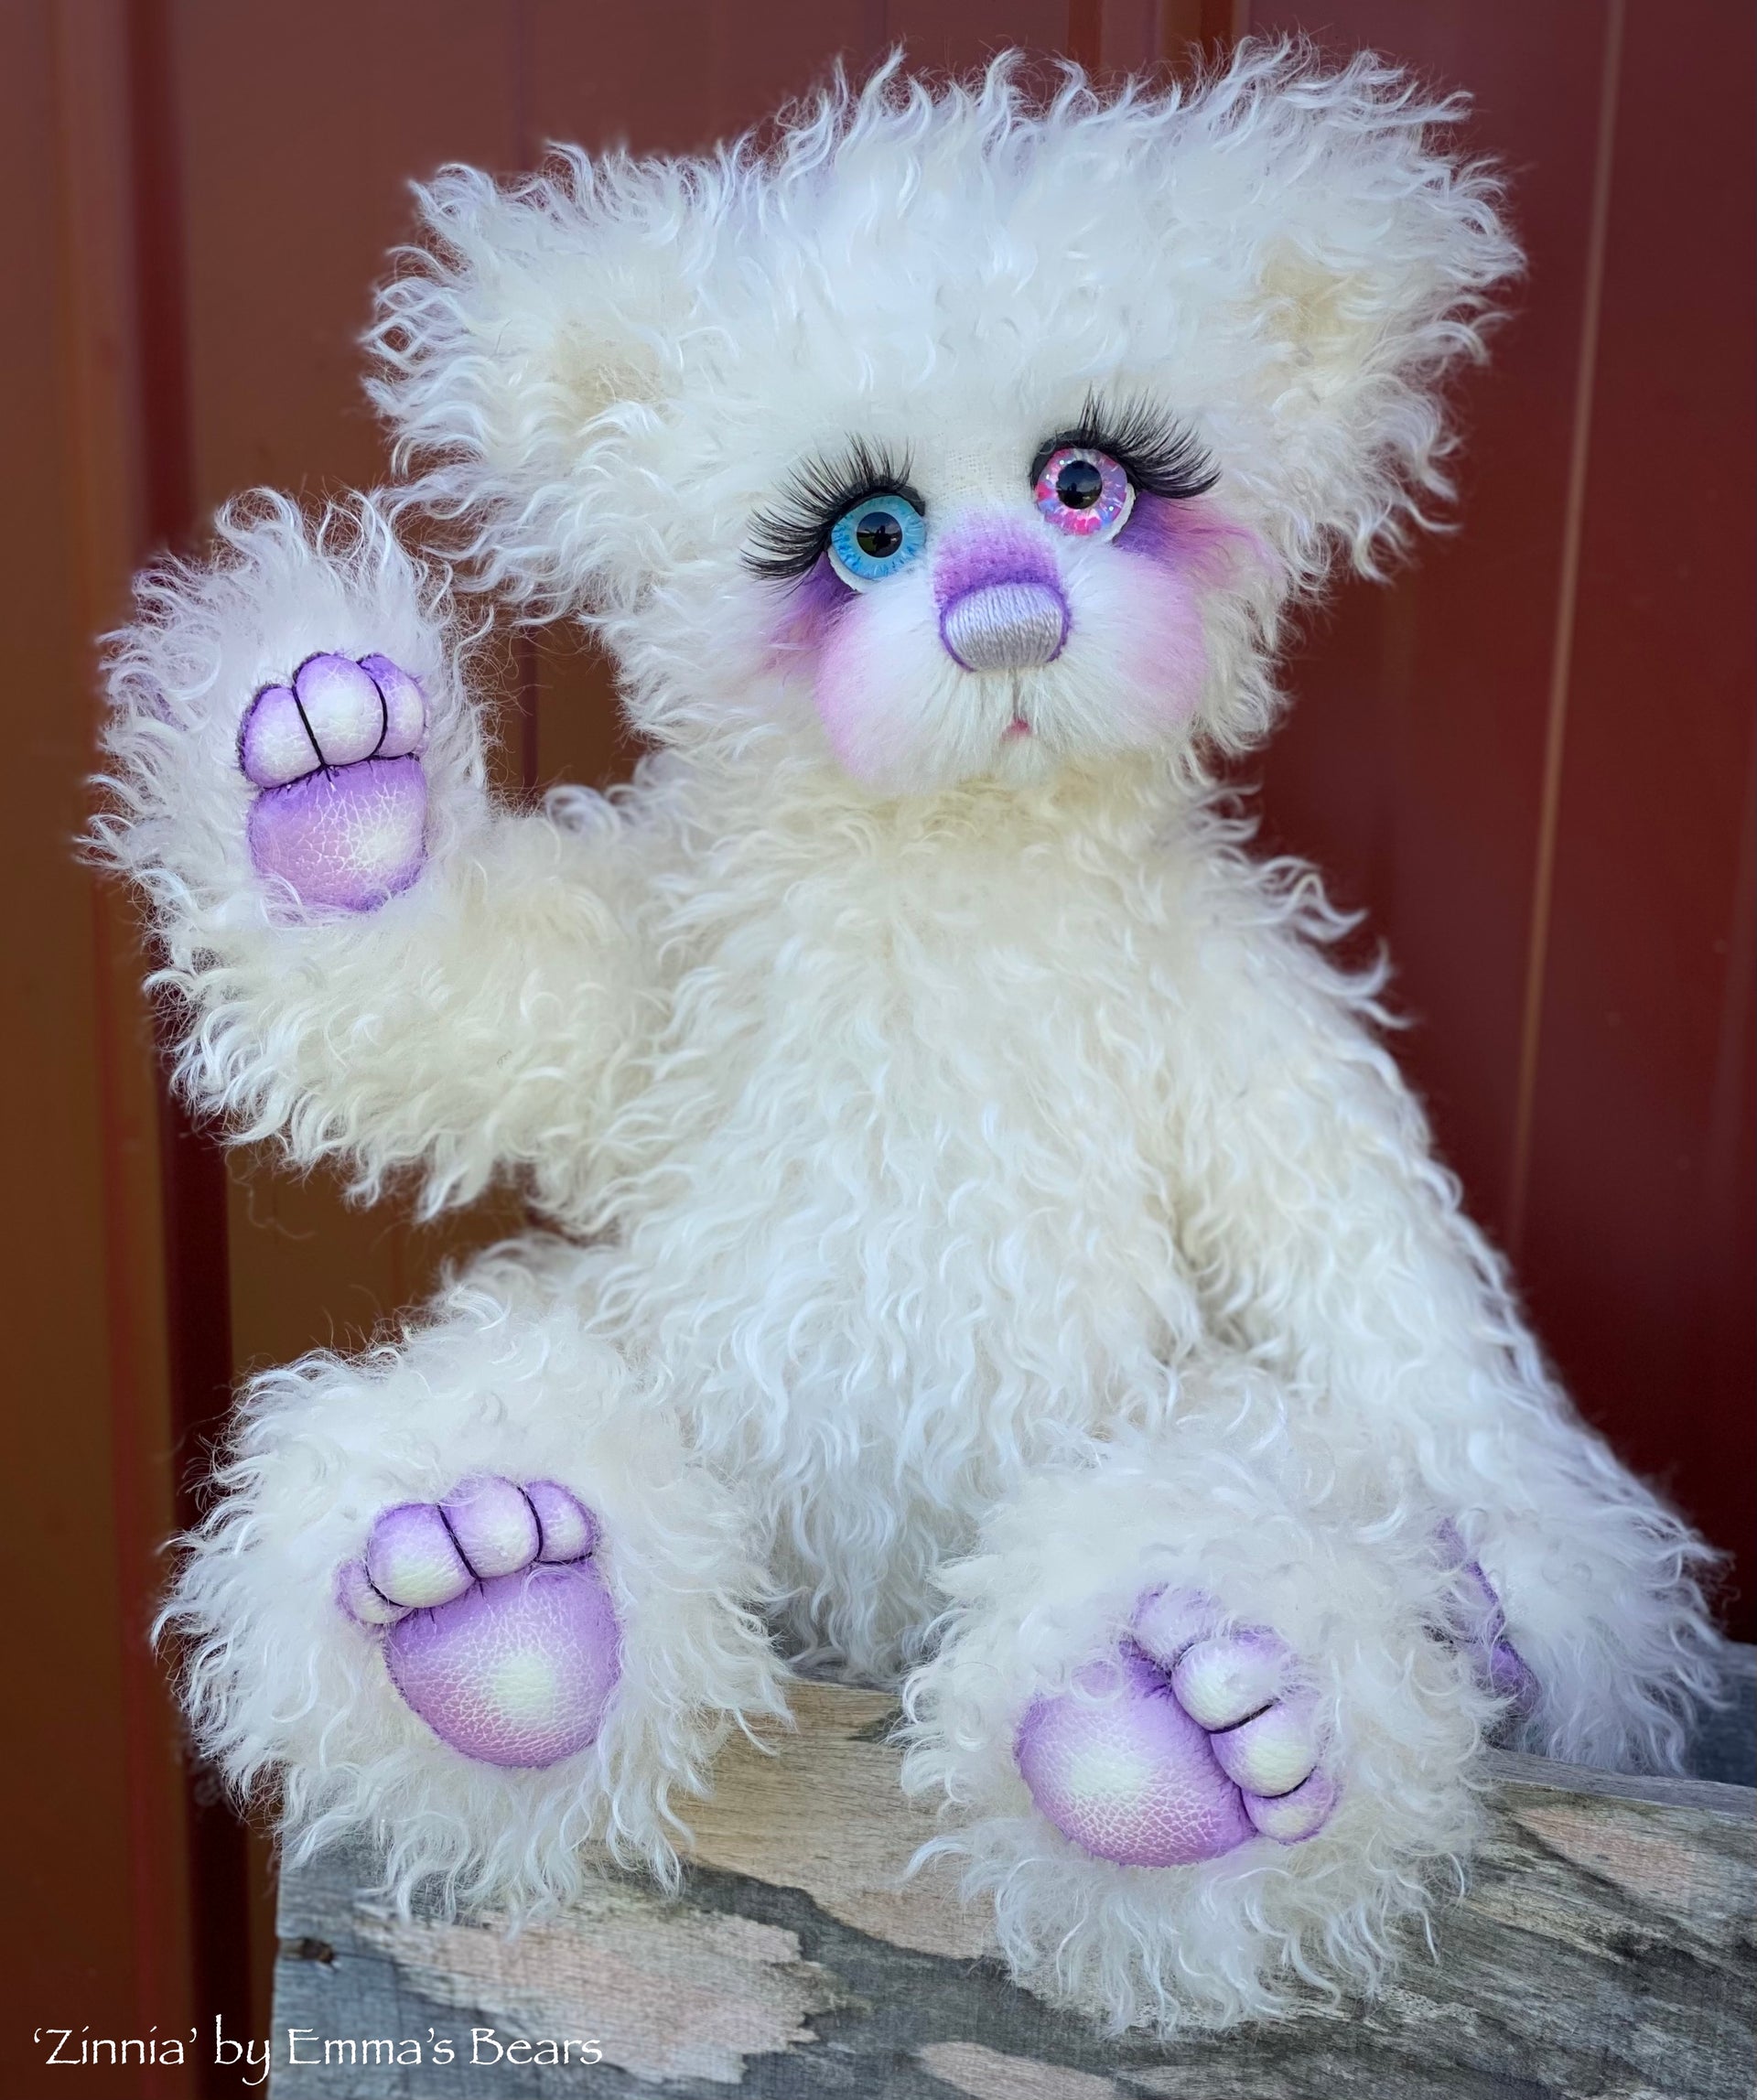 Zinnia - 16" White Curlylocks and Alpaca artist bear by Emma's Bears - OOAK